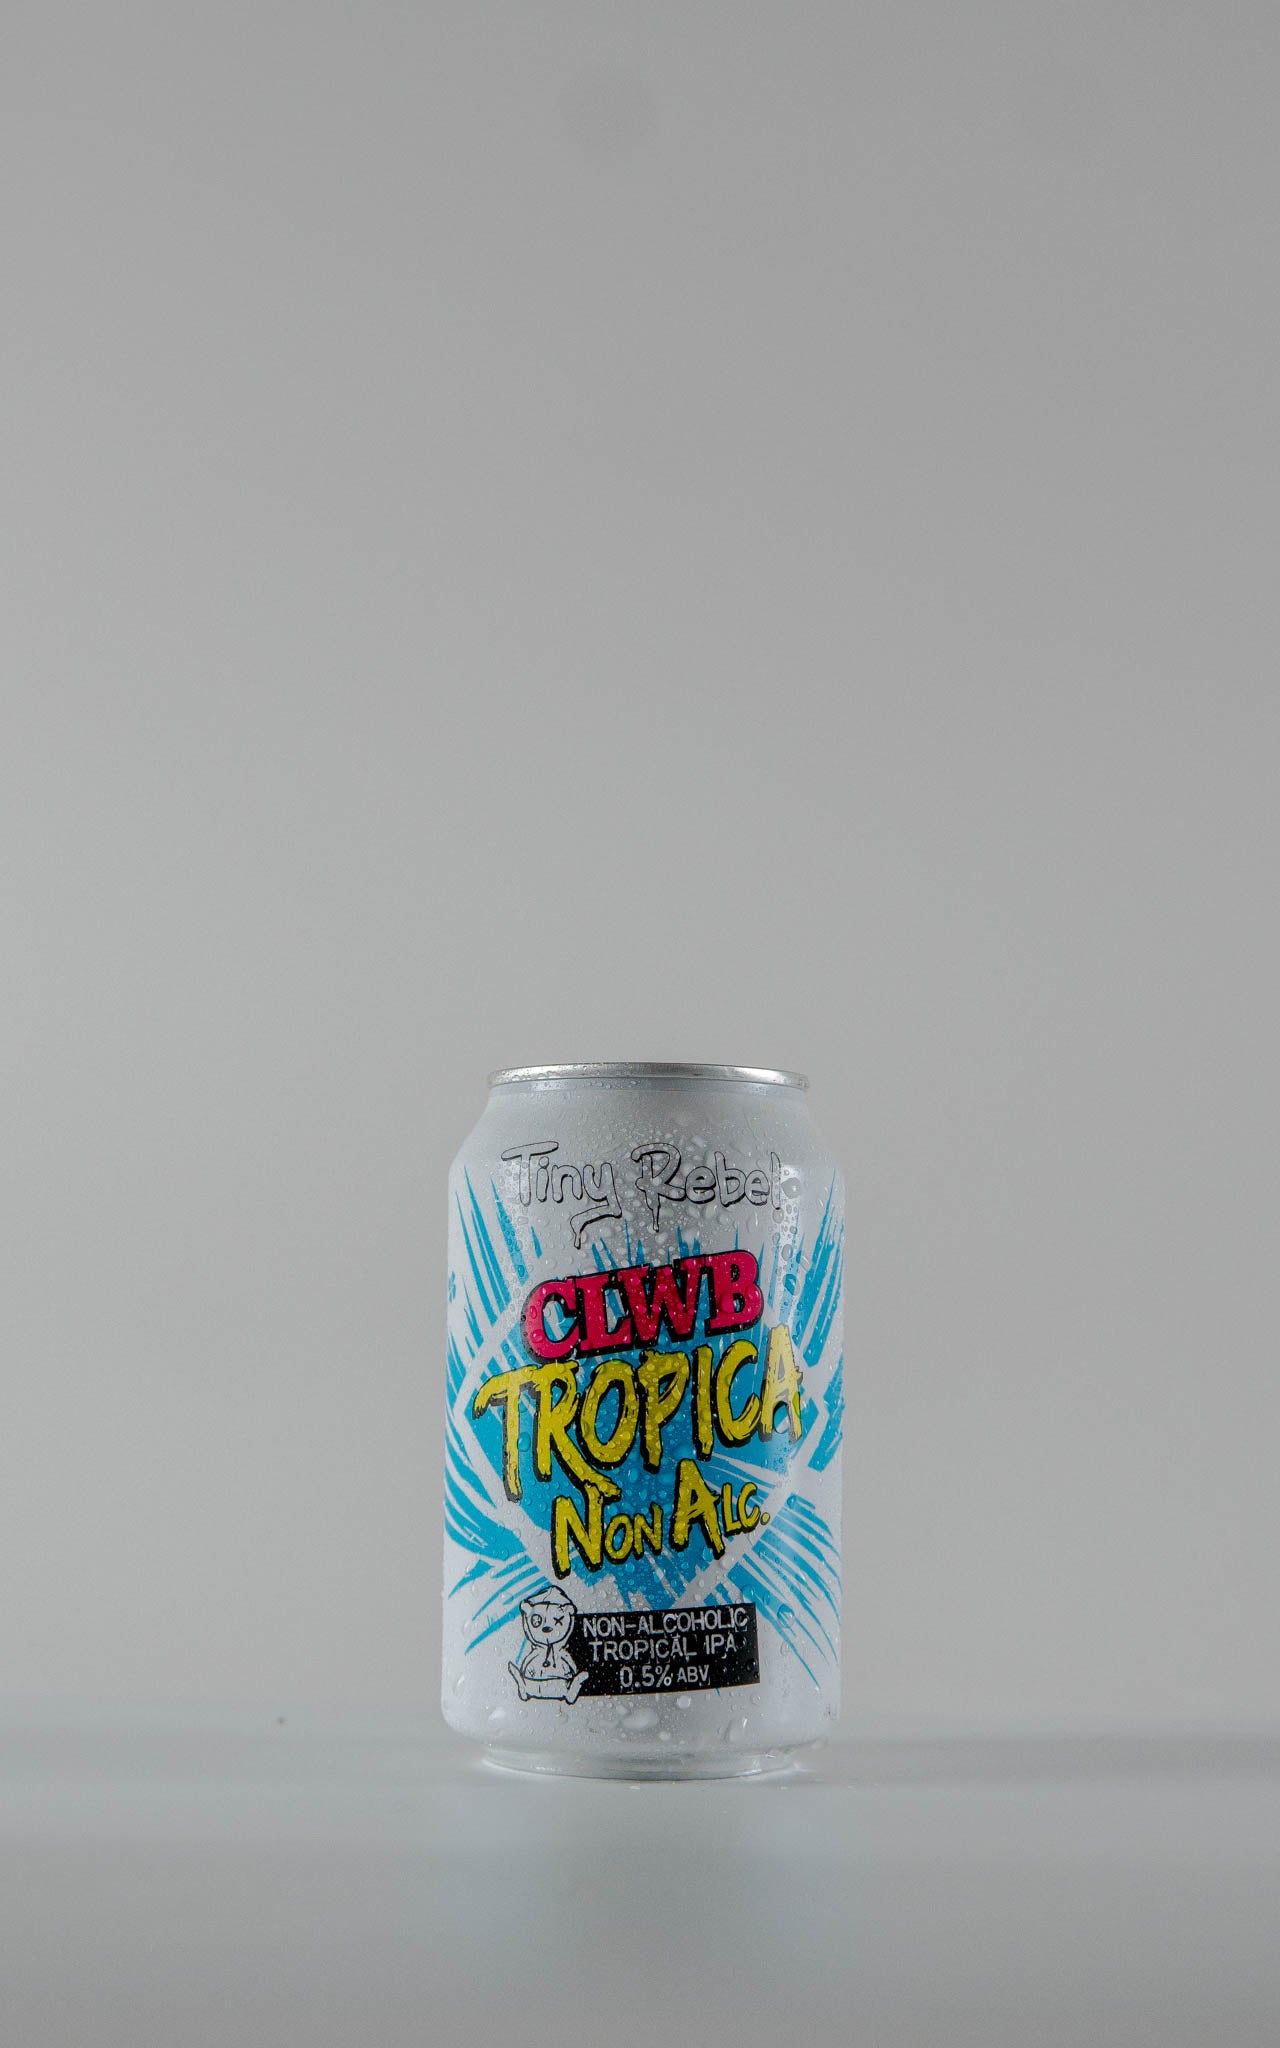 Tiny Rebel Clwb Tropica Non Alcoholic IPA 0.5% - 330ml